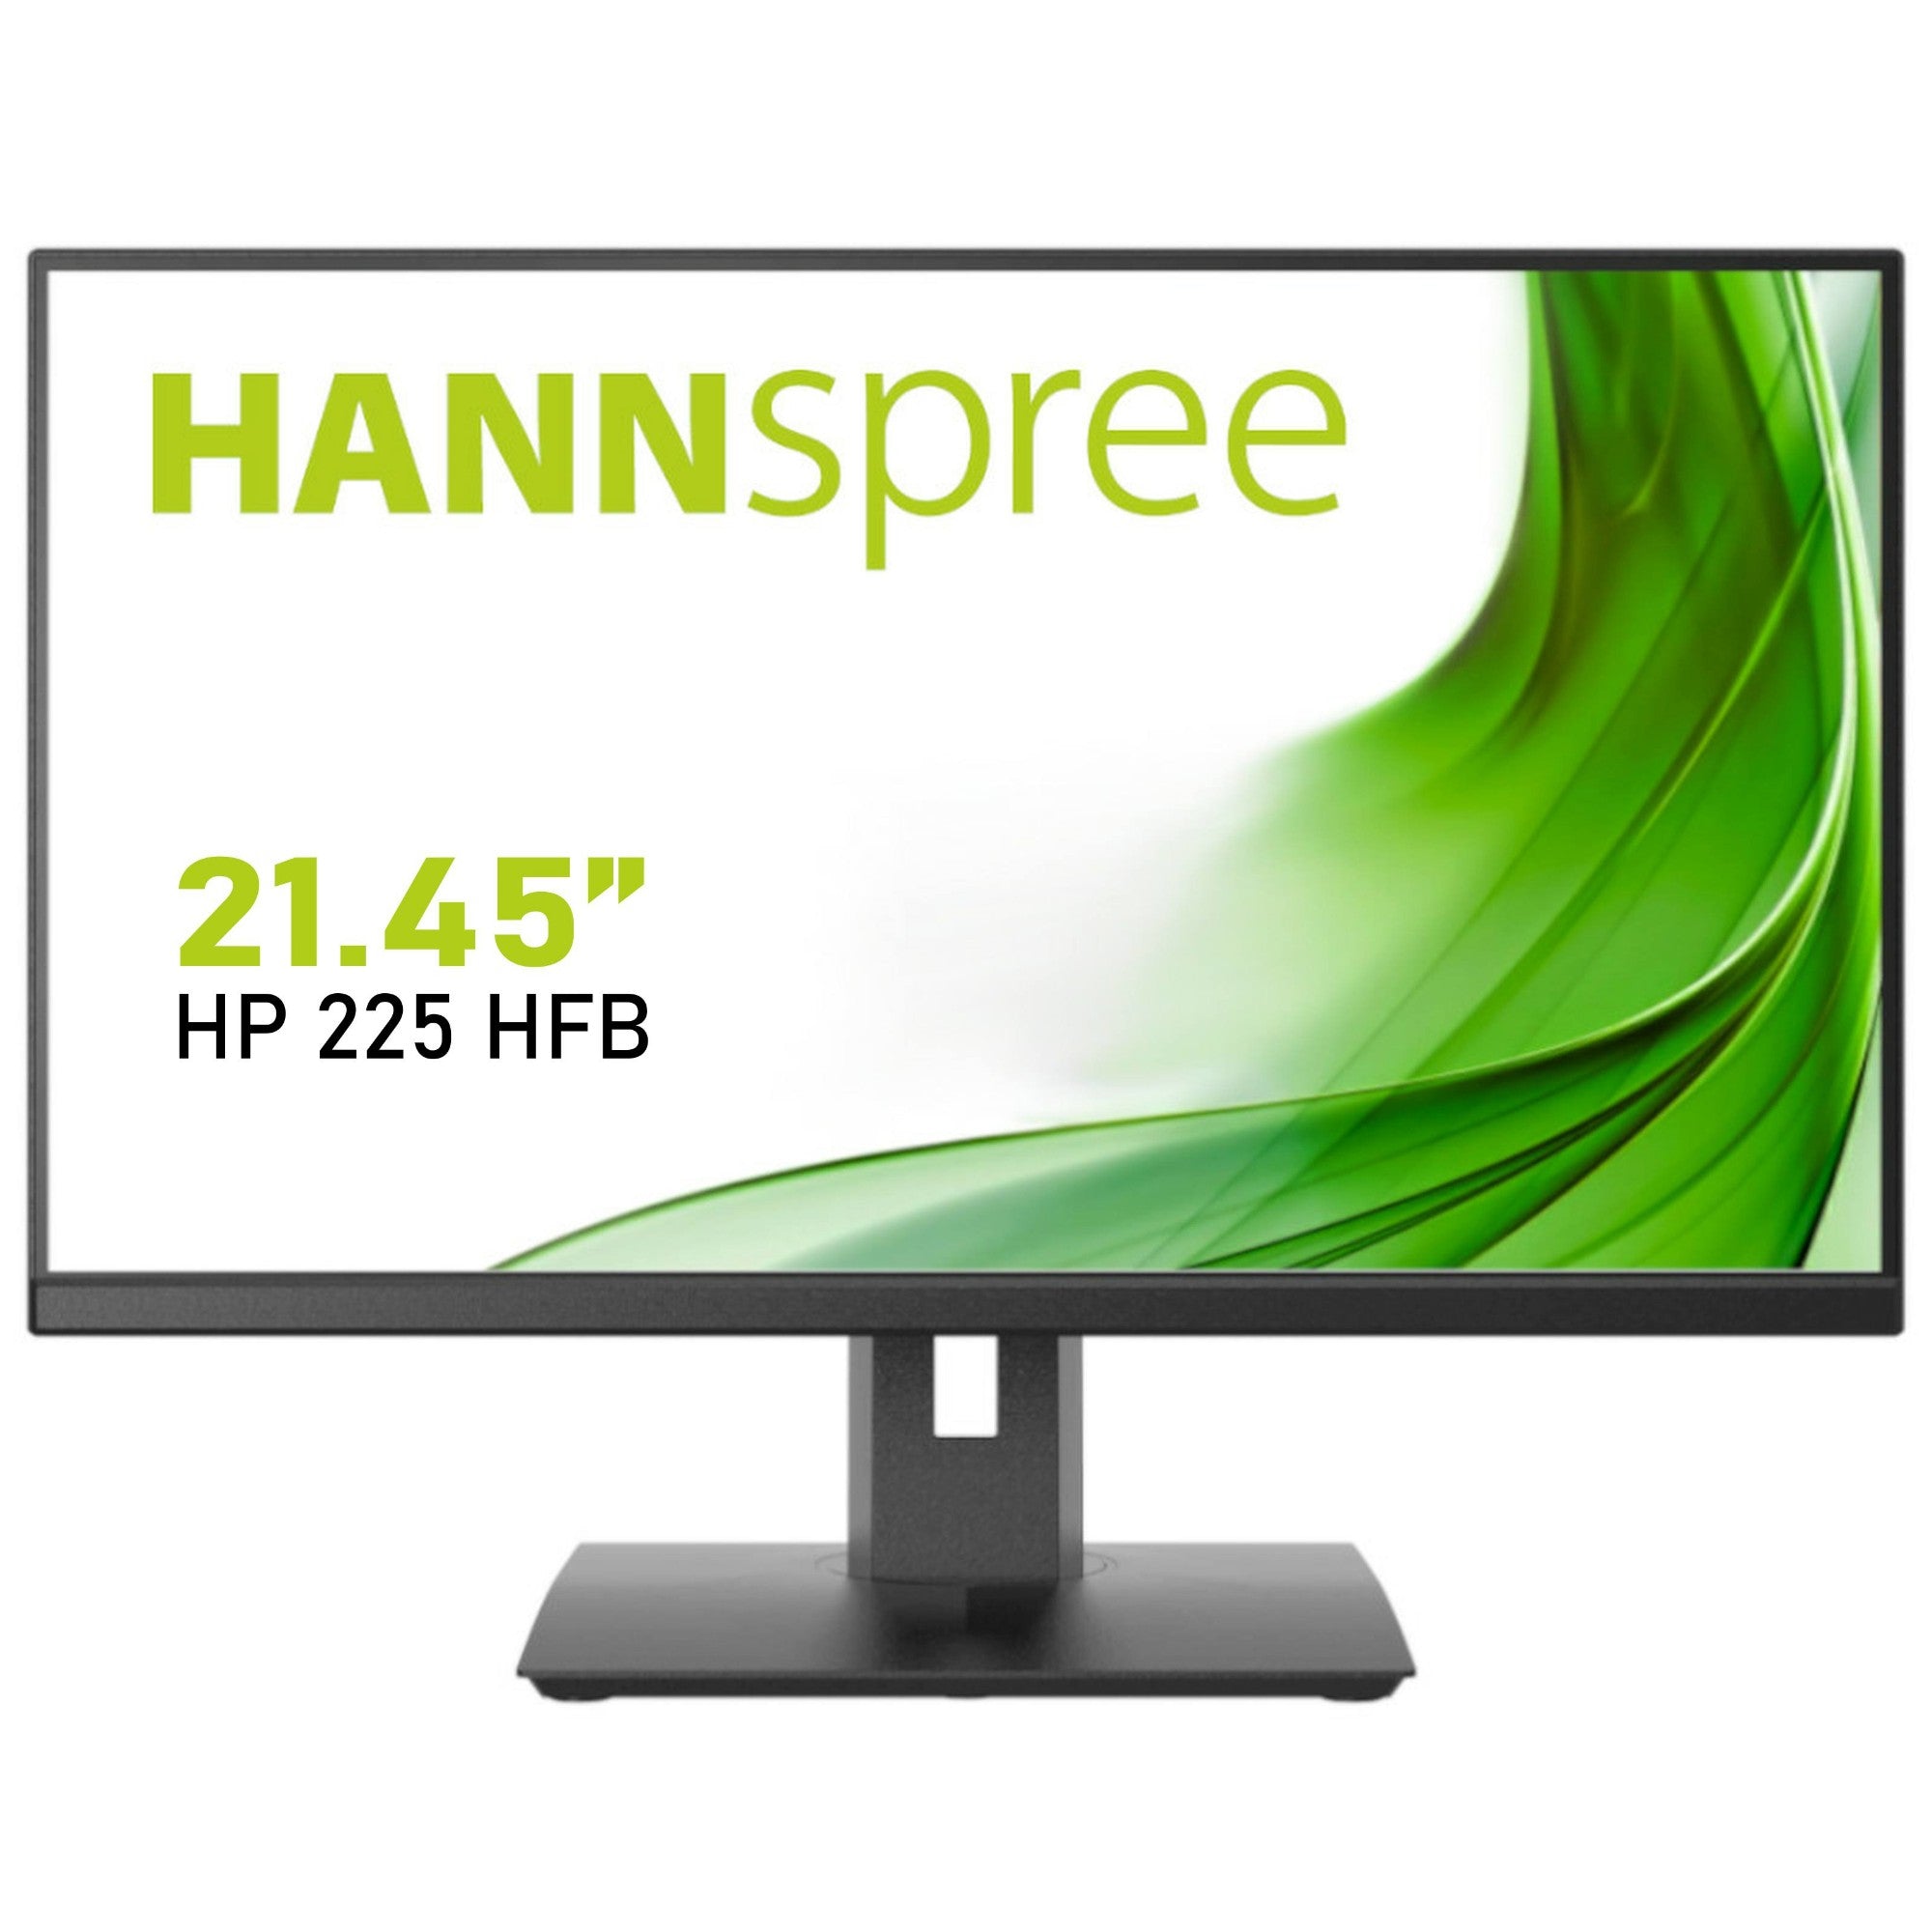 Hannspree HP 225 HFB 54.5 cm (21.4") 1920 x 1080 pixels Full HD LED Black